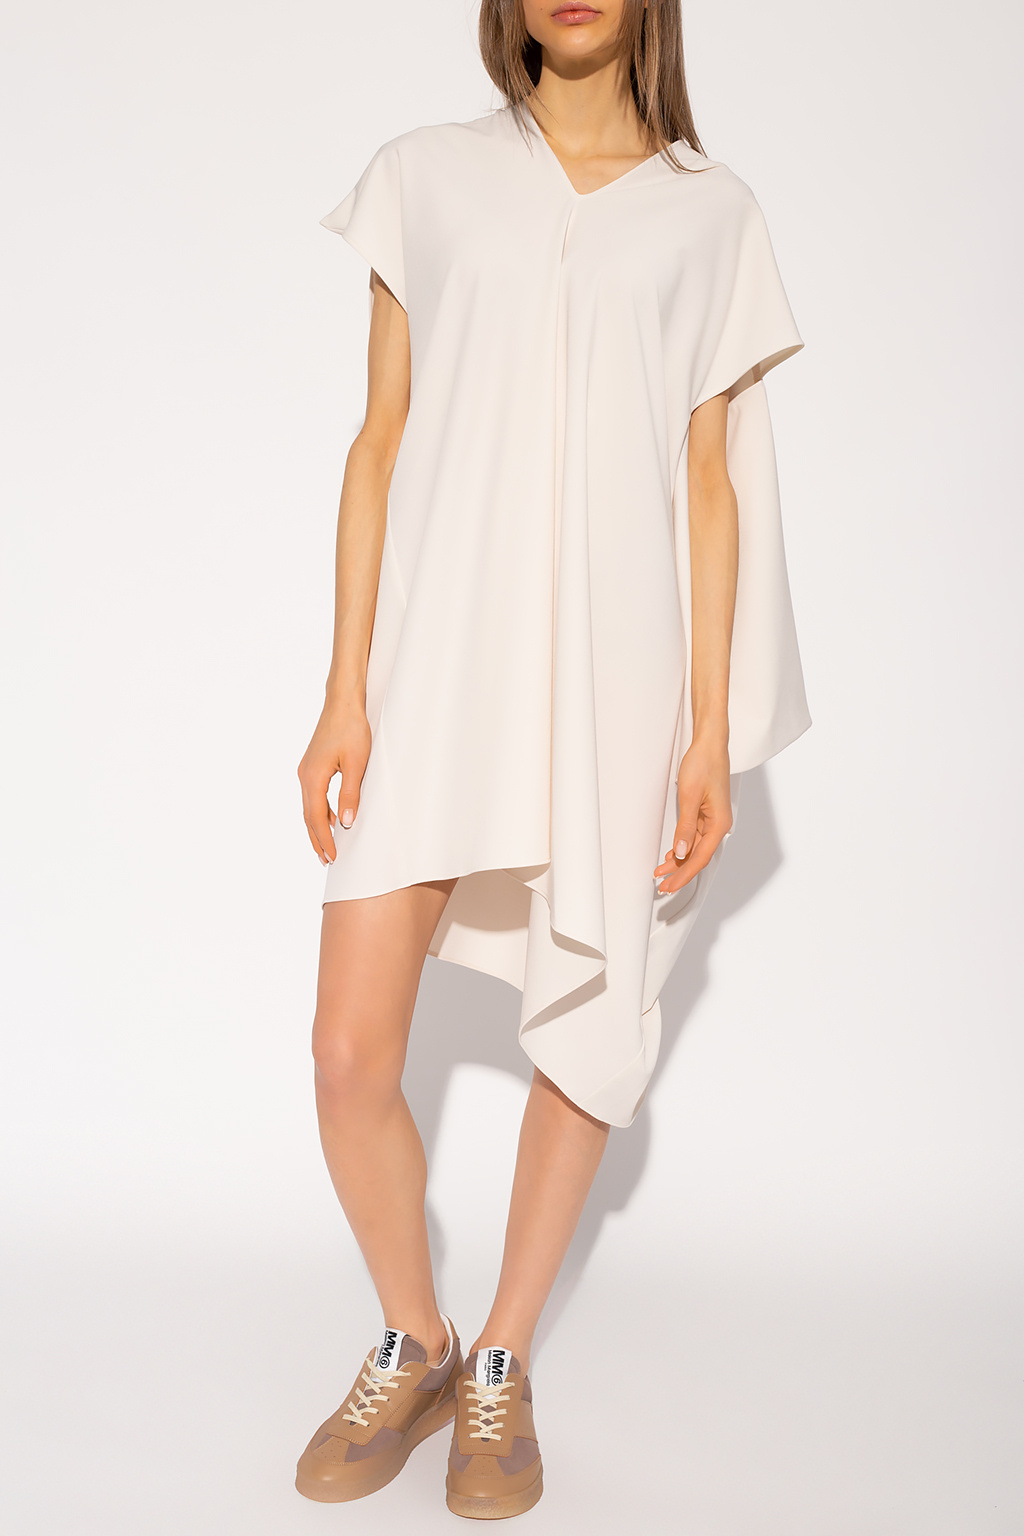 MM6 Maison Margiela asymmetric off-shoulder dress - White